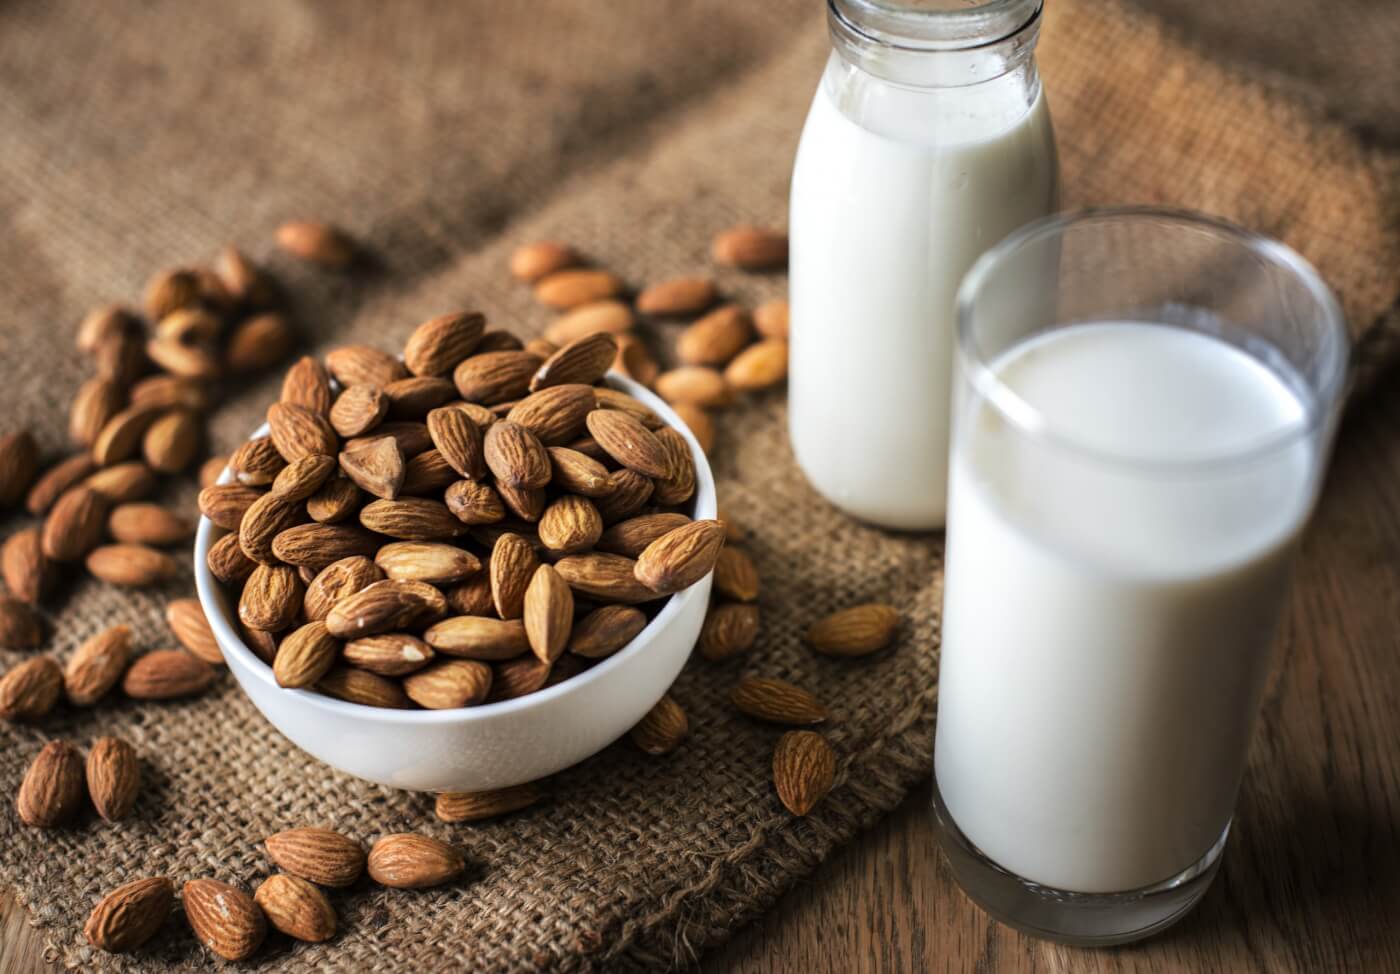 make vegan milk at home, like almond milk